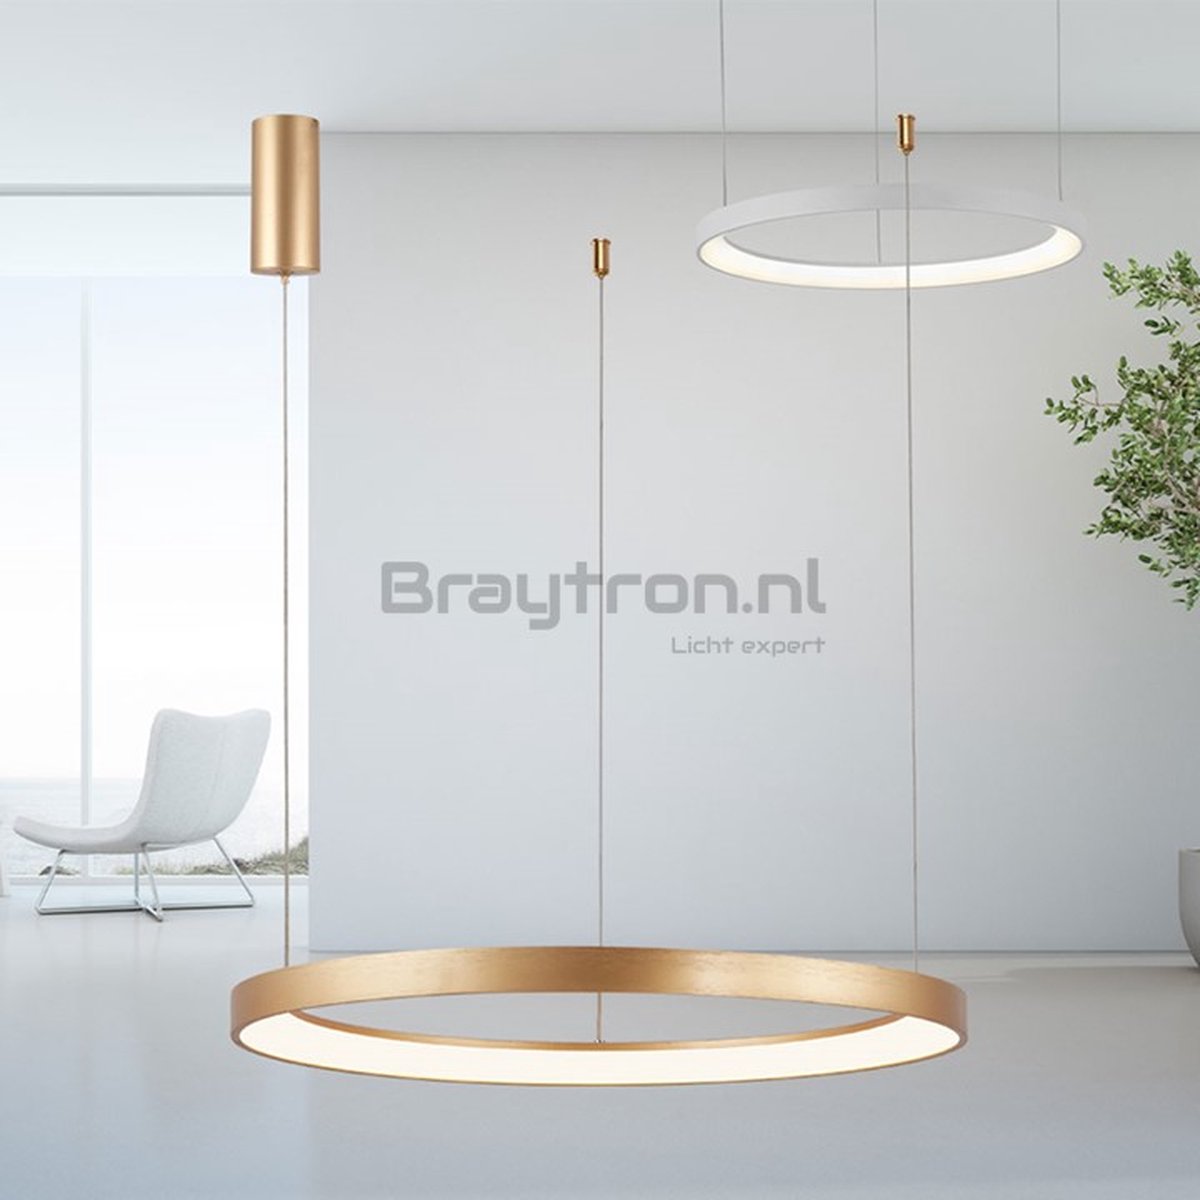 Braytron.nl | Decoratieve LED lamp BELLA | Ø58cm. | Gouden ronde led hanglamp | 46W | 3in1 wit kleuren licht | 3 jaar garantie.